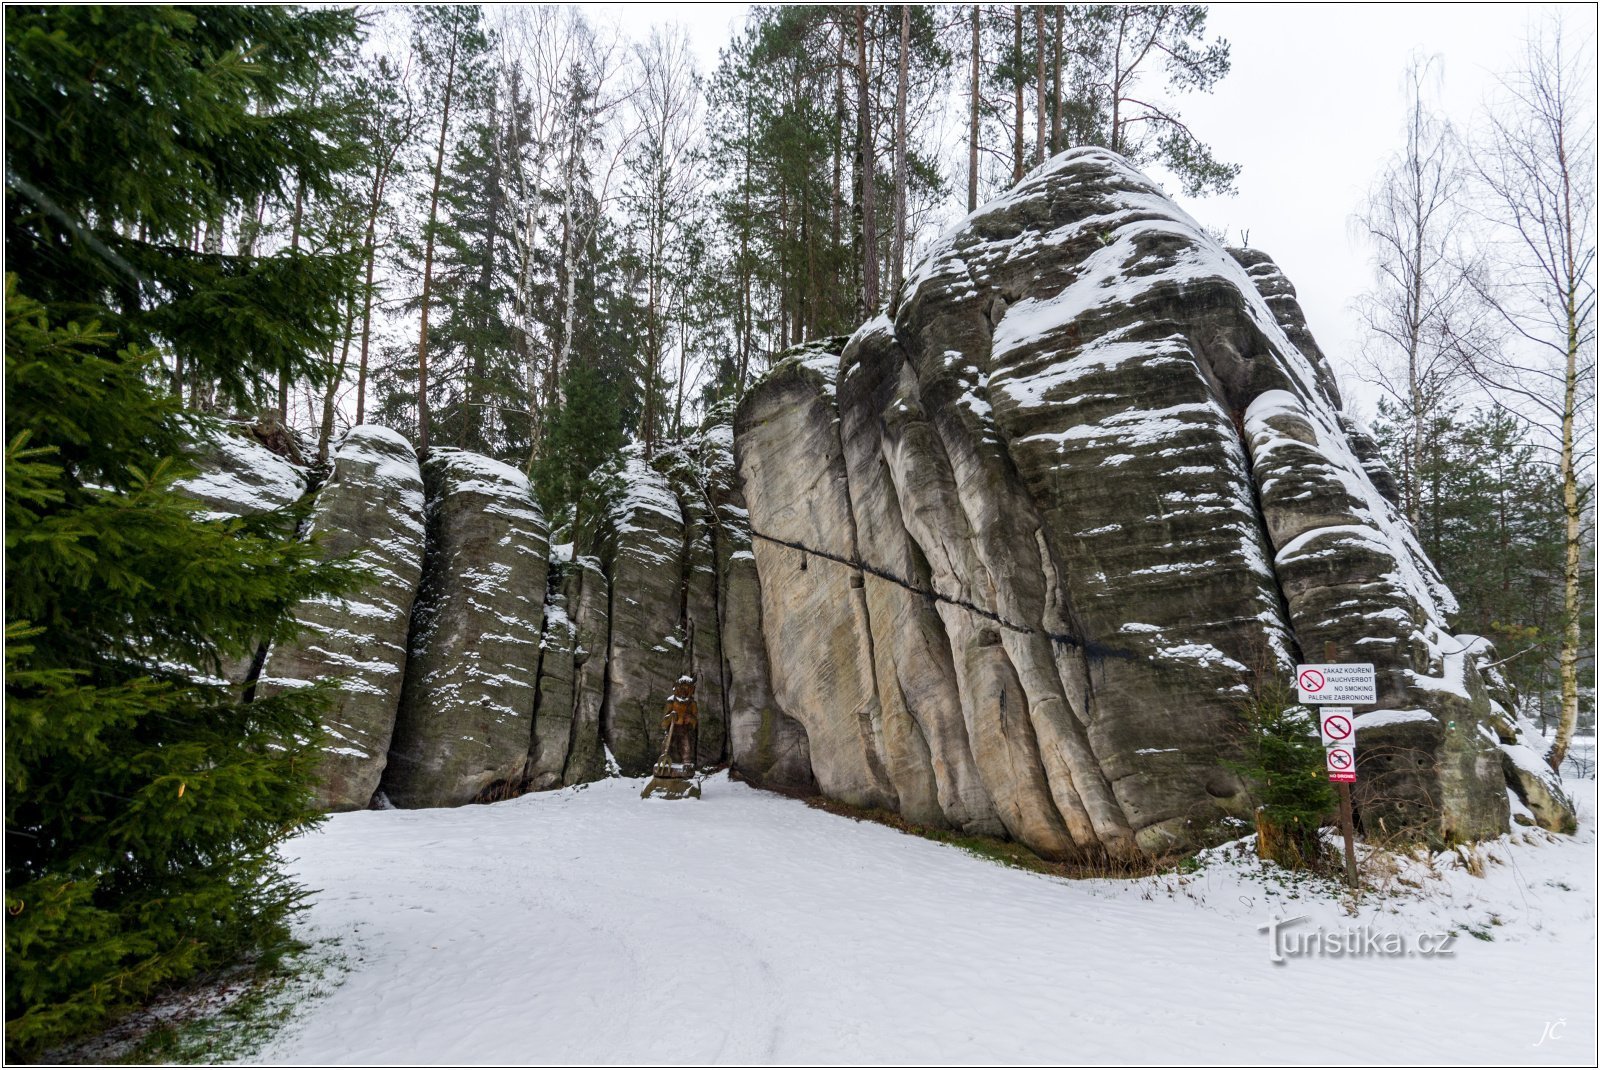 Winter Adrspaš rocks